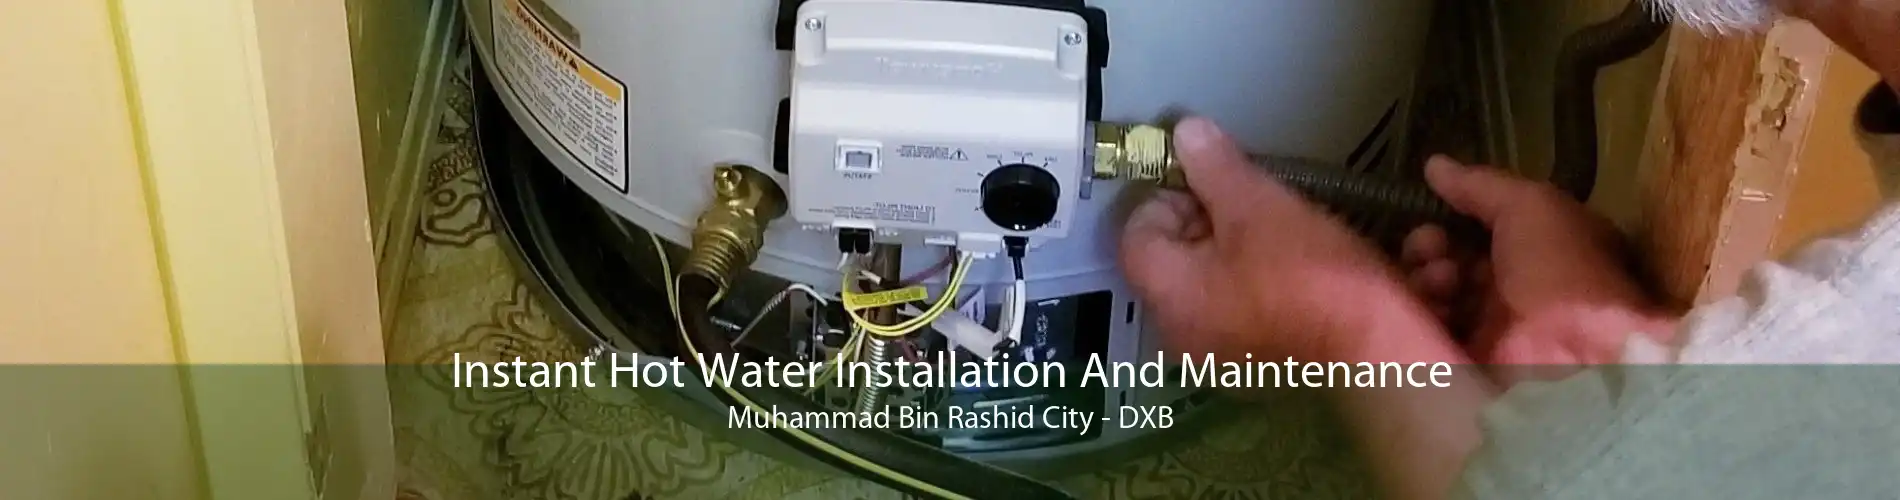 Instant Hot Water Installation And Maintenance Muhammad Bin Rashid City - DXB